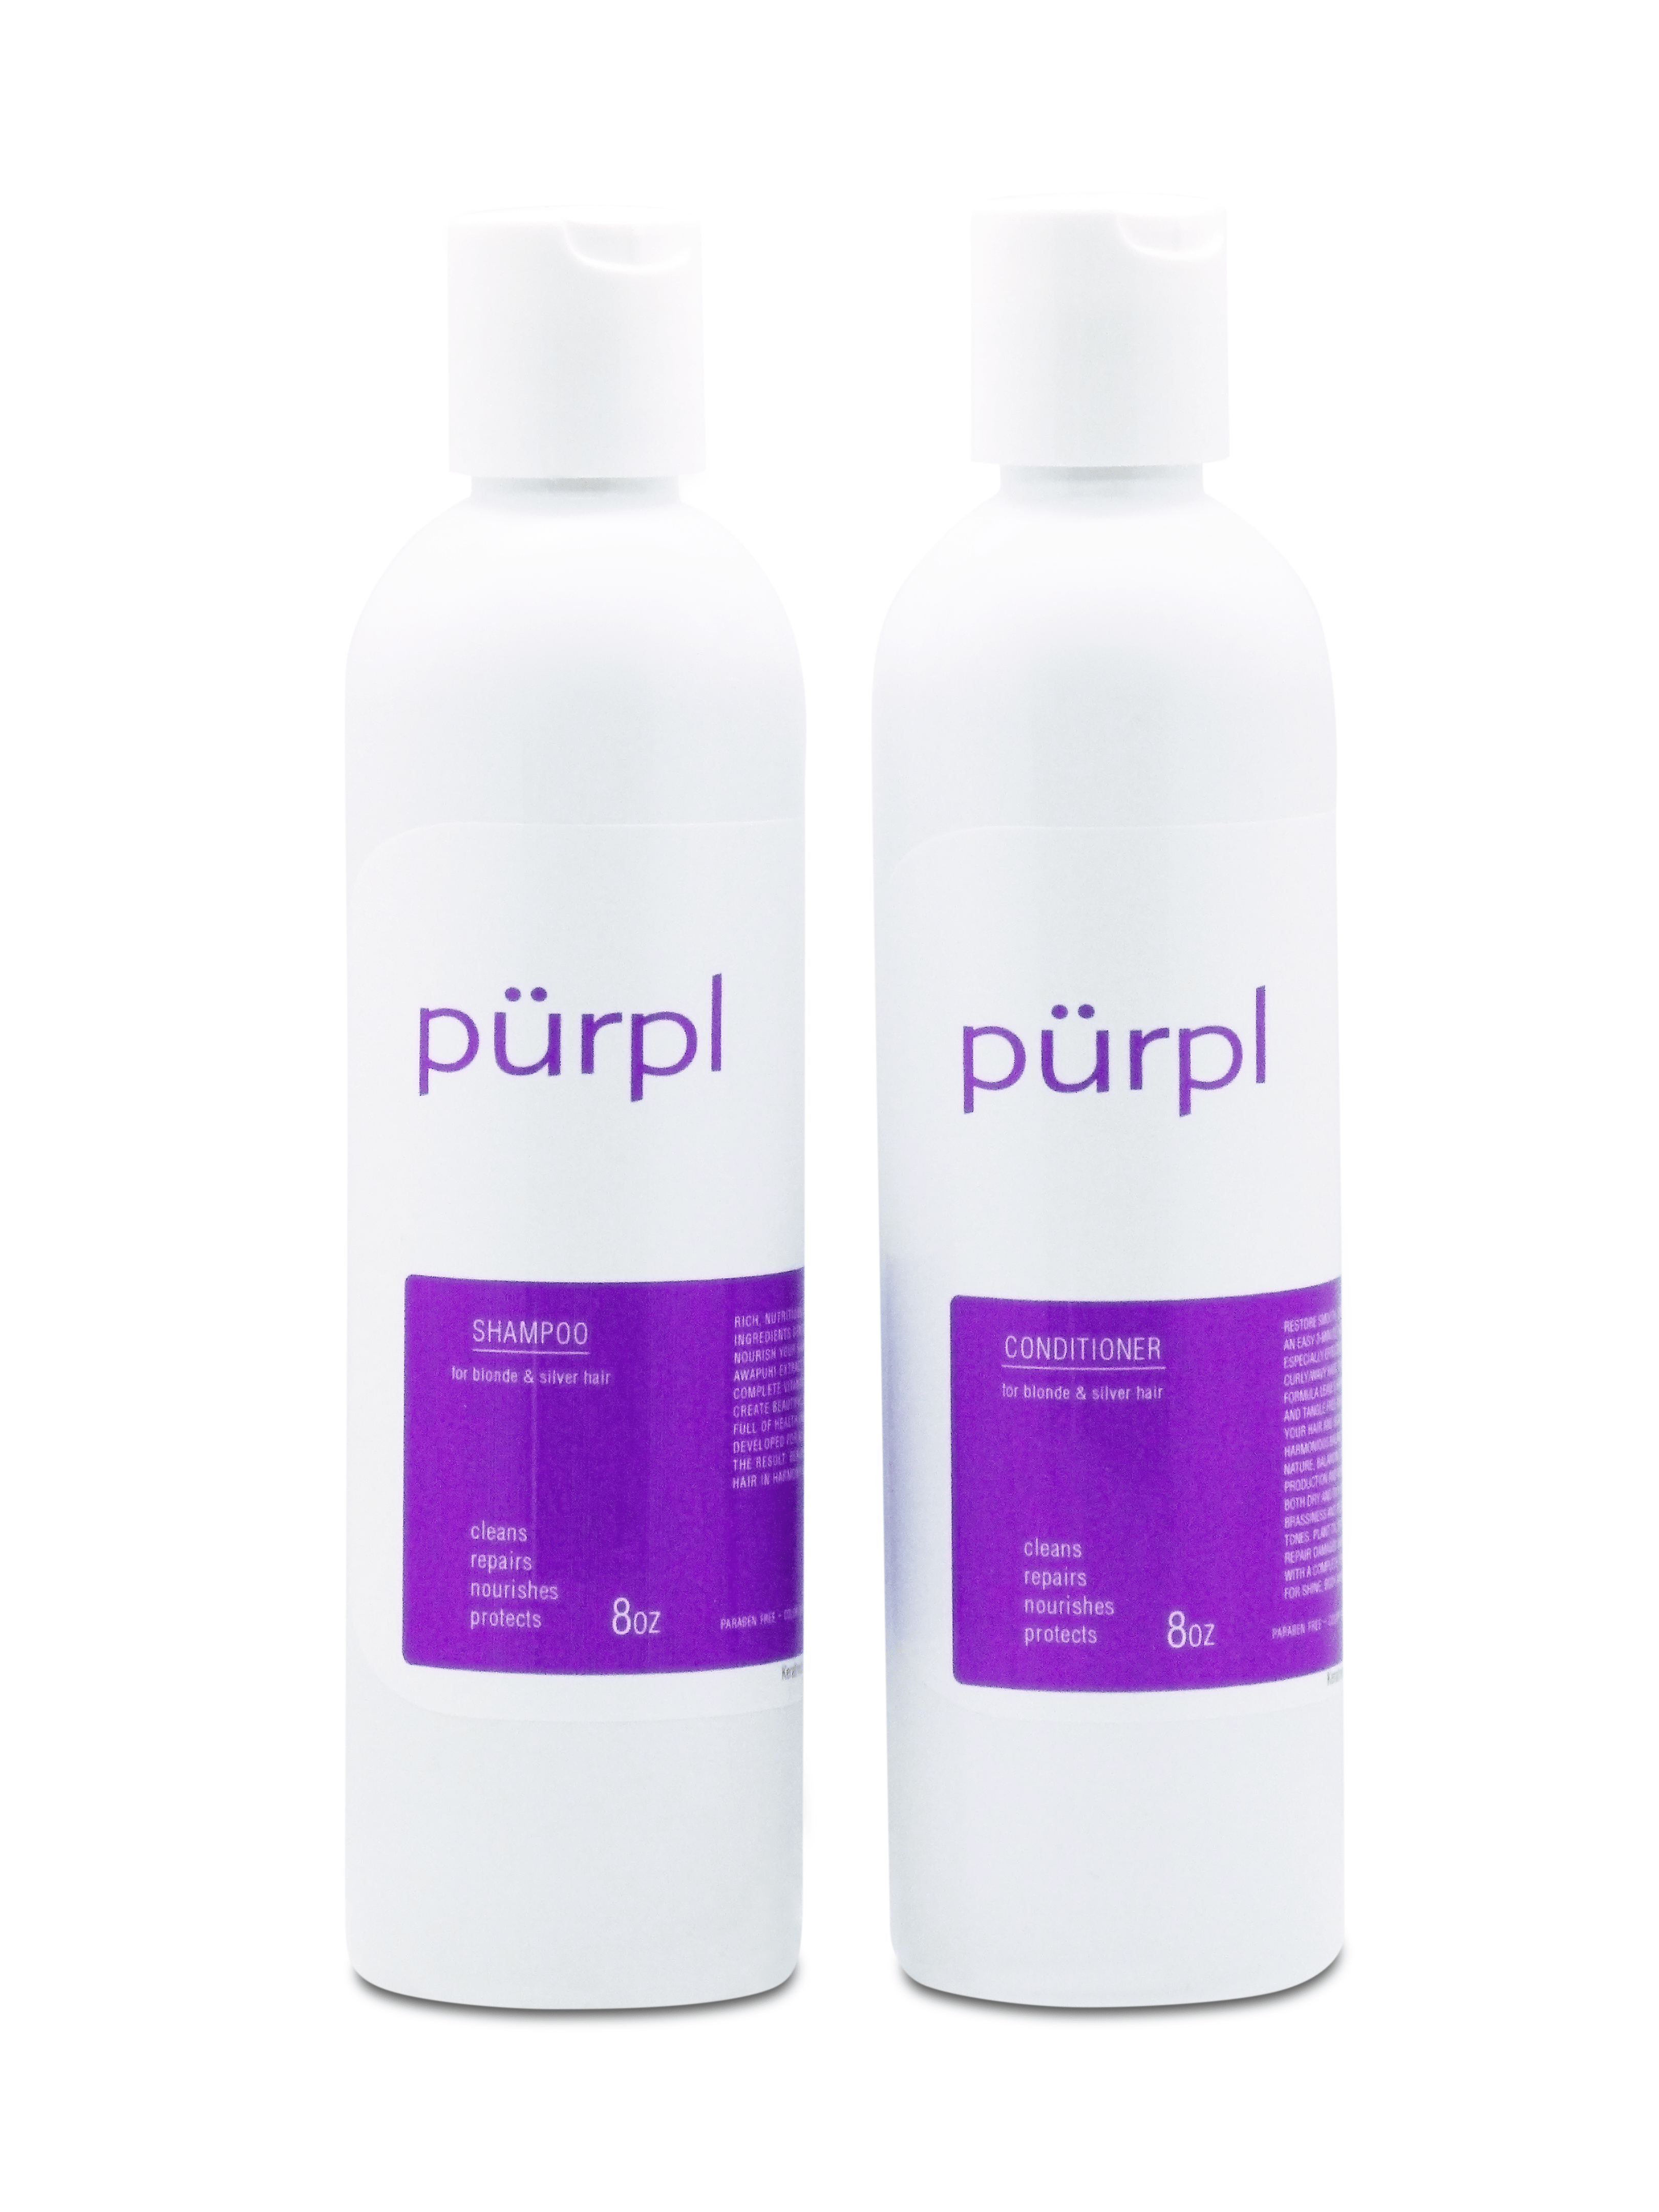 Purpl Shampoo and Conditioner Label